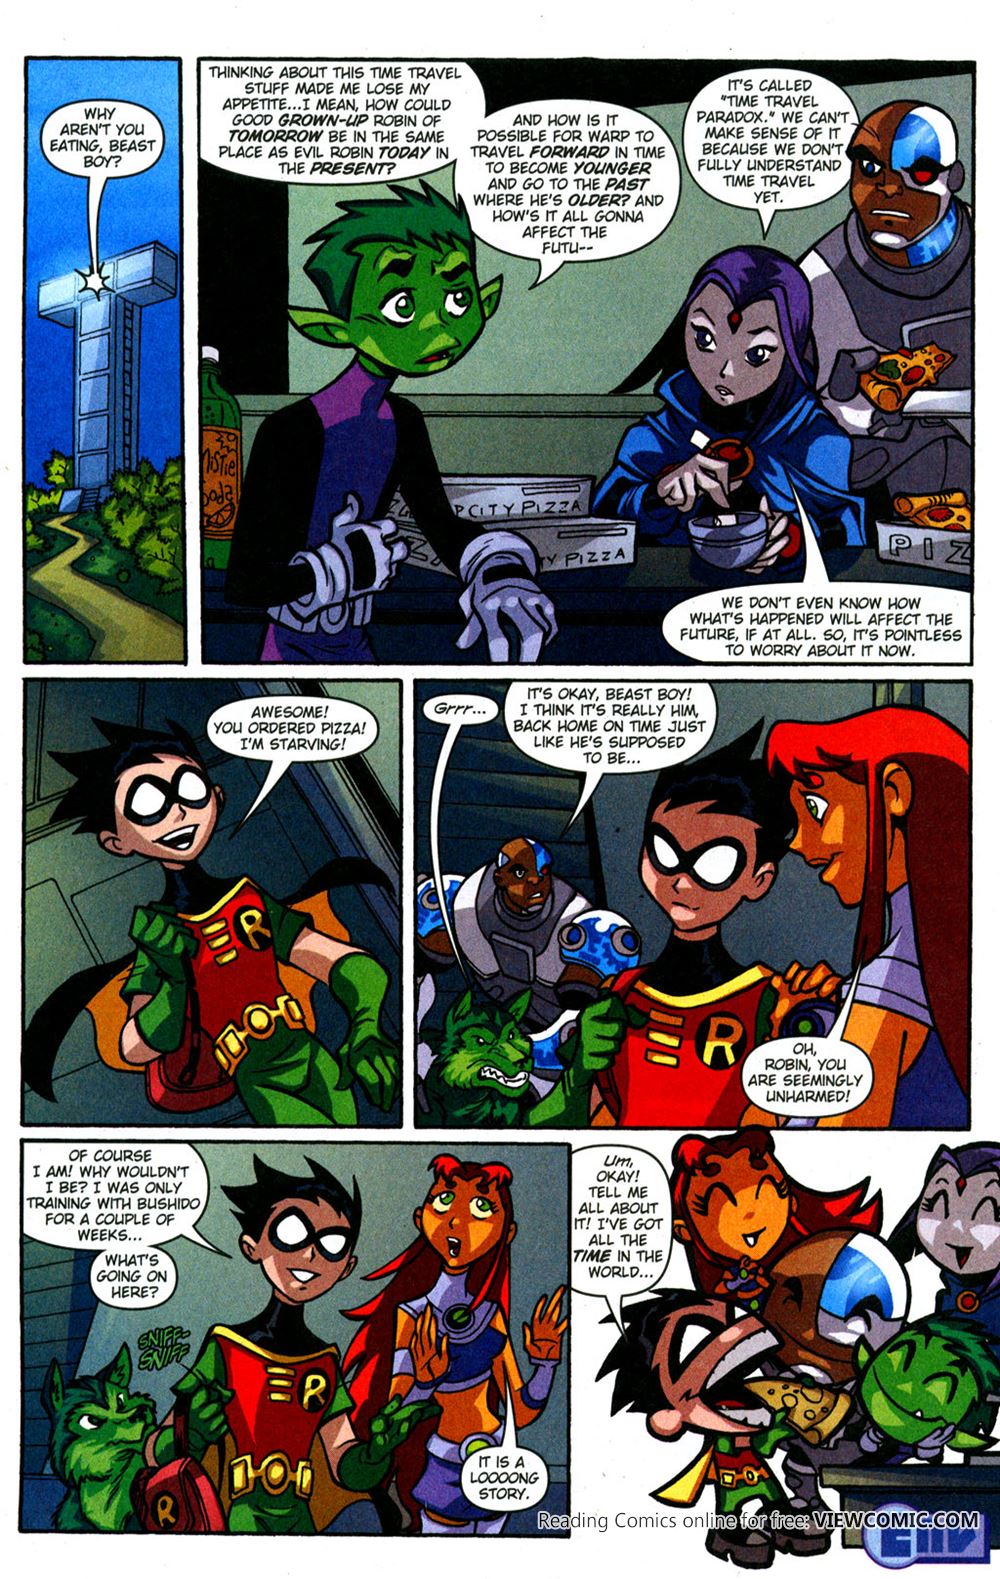 Read Teen Titans Online 17